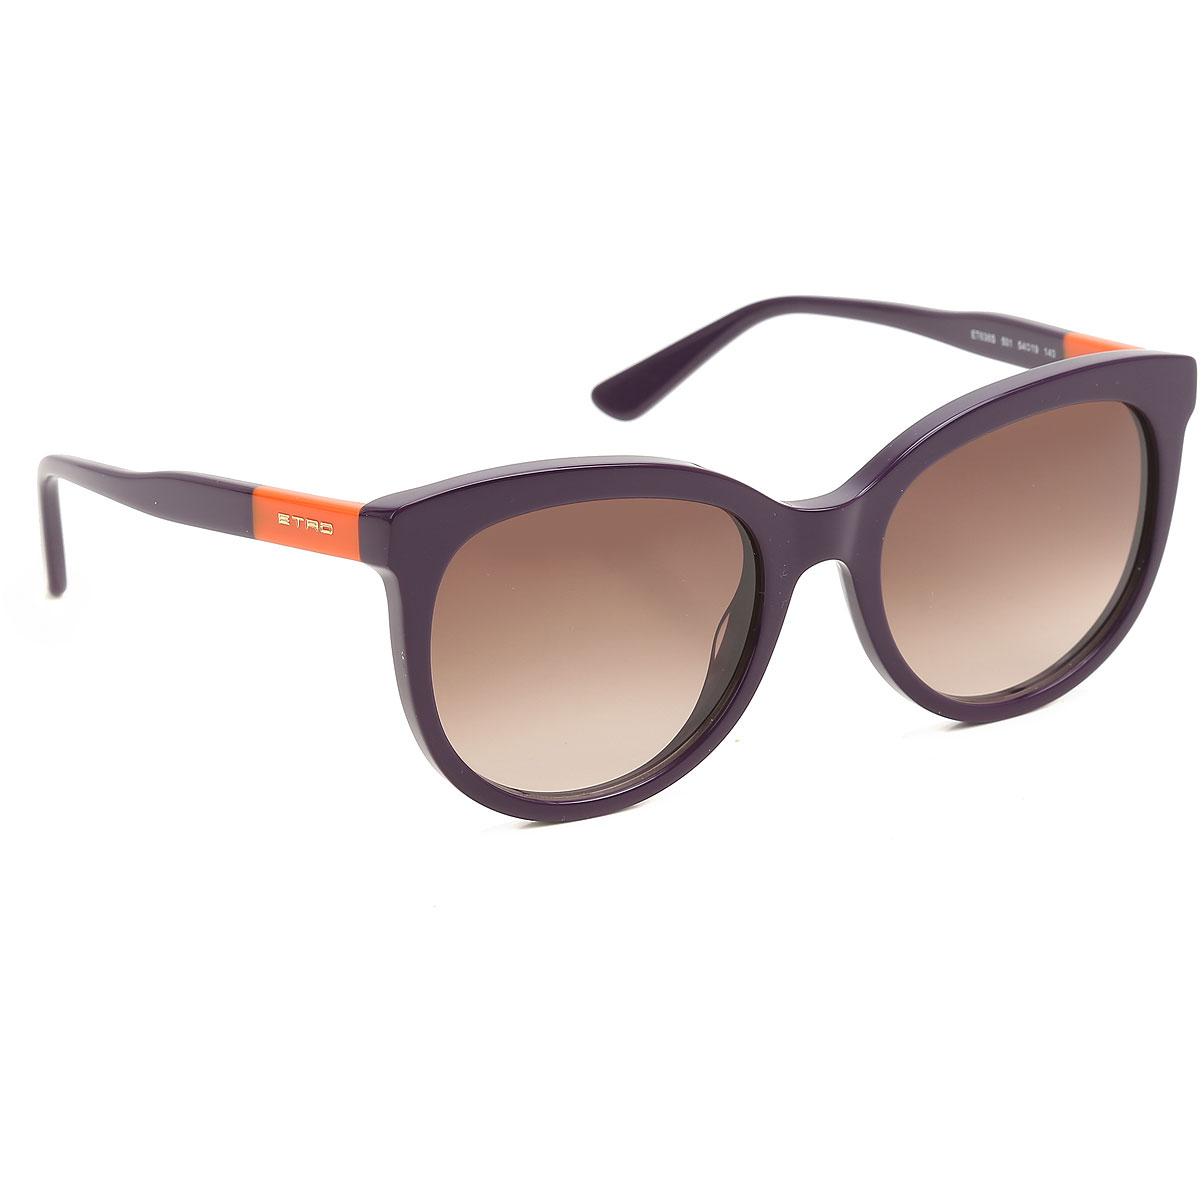 Sunglasses Etro, Style code: et636s-501-